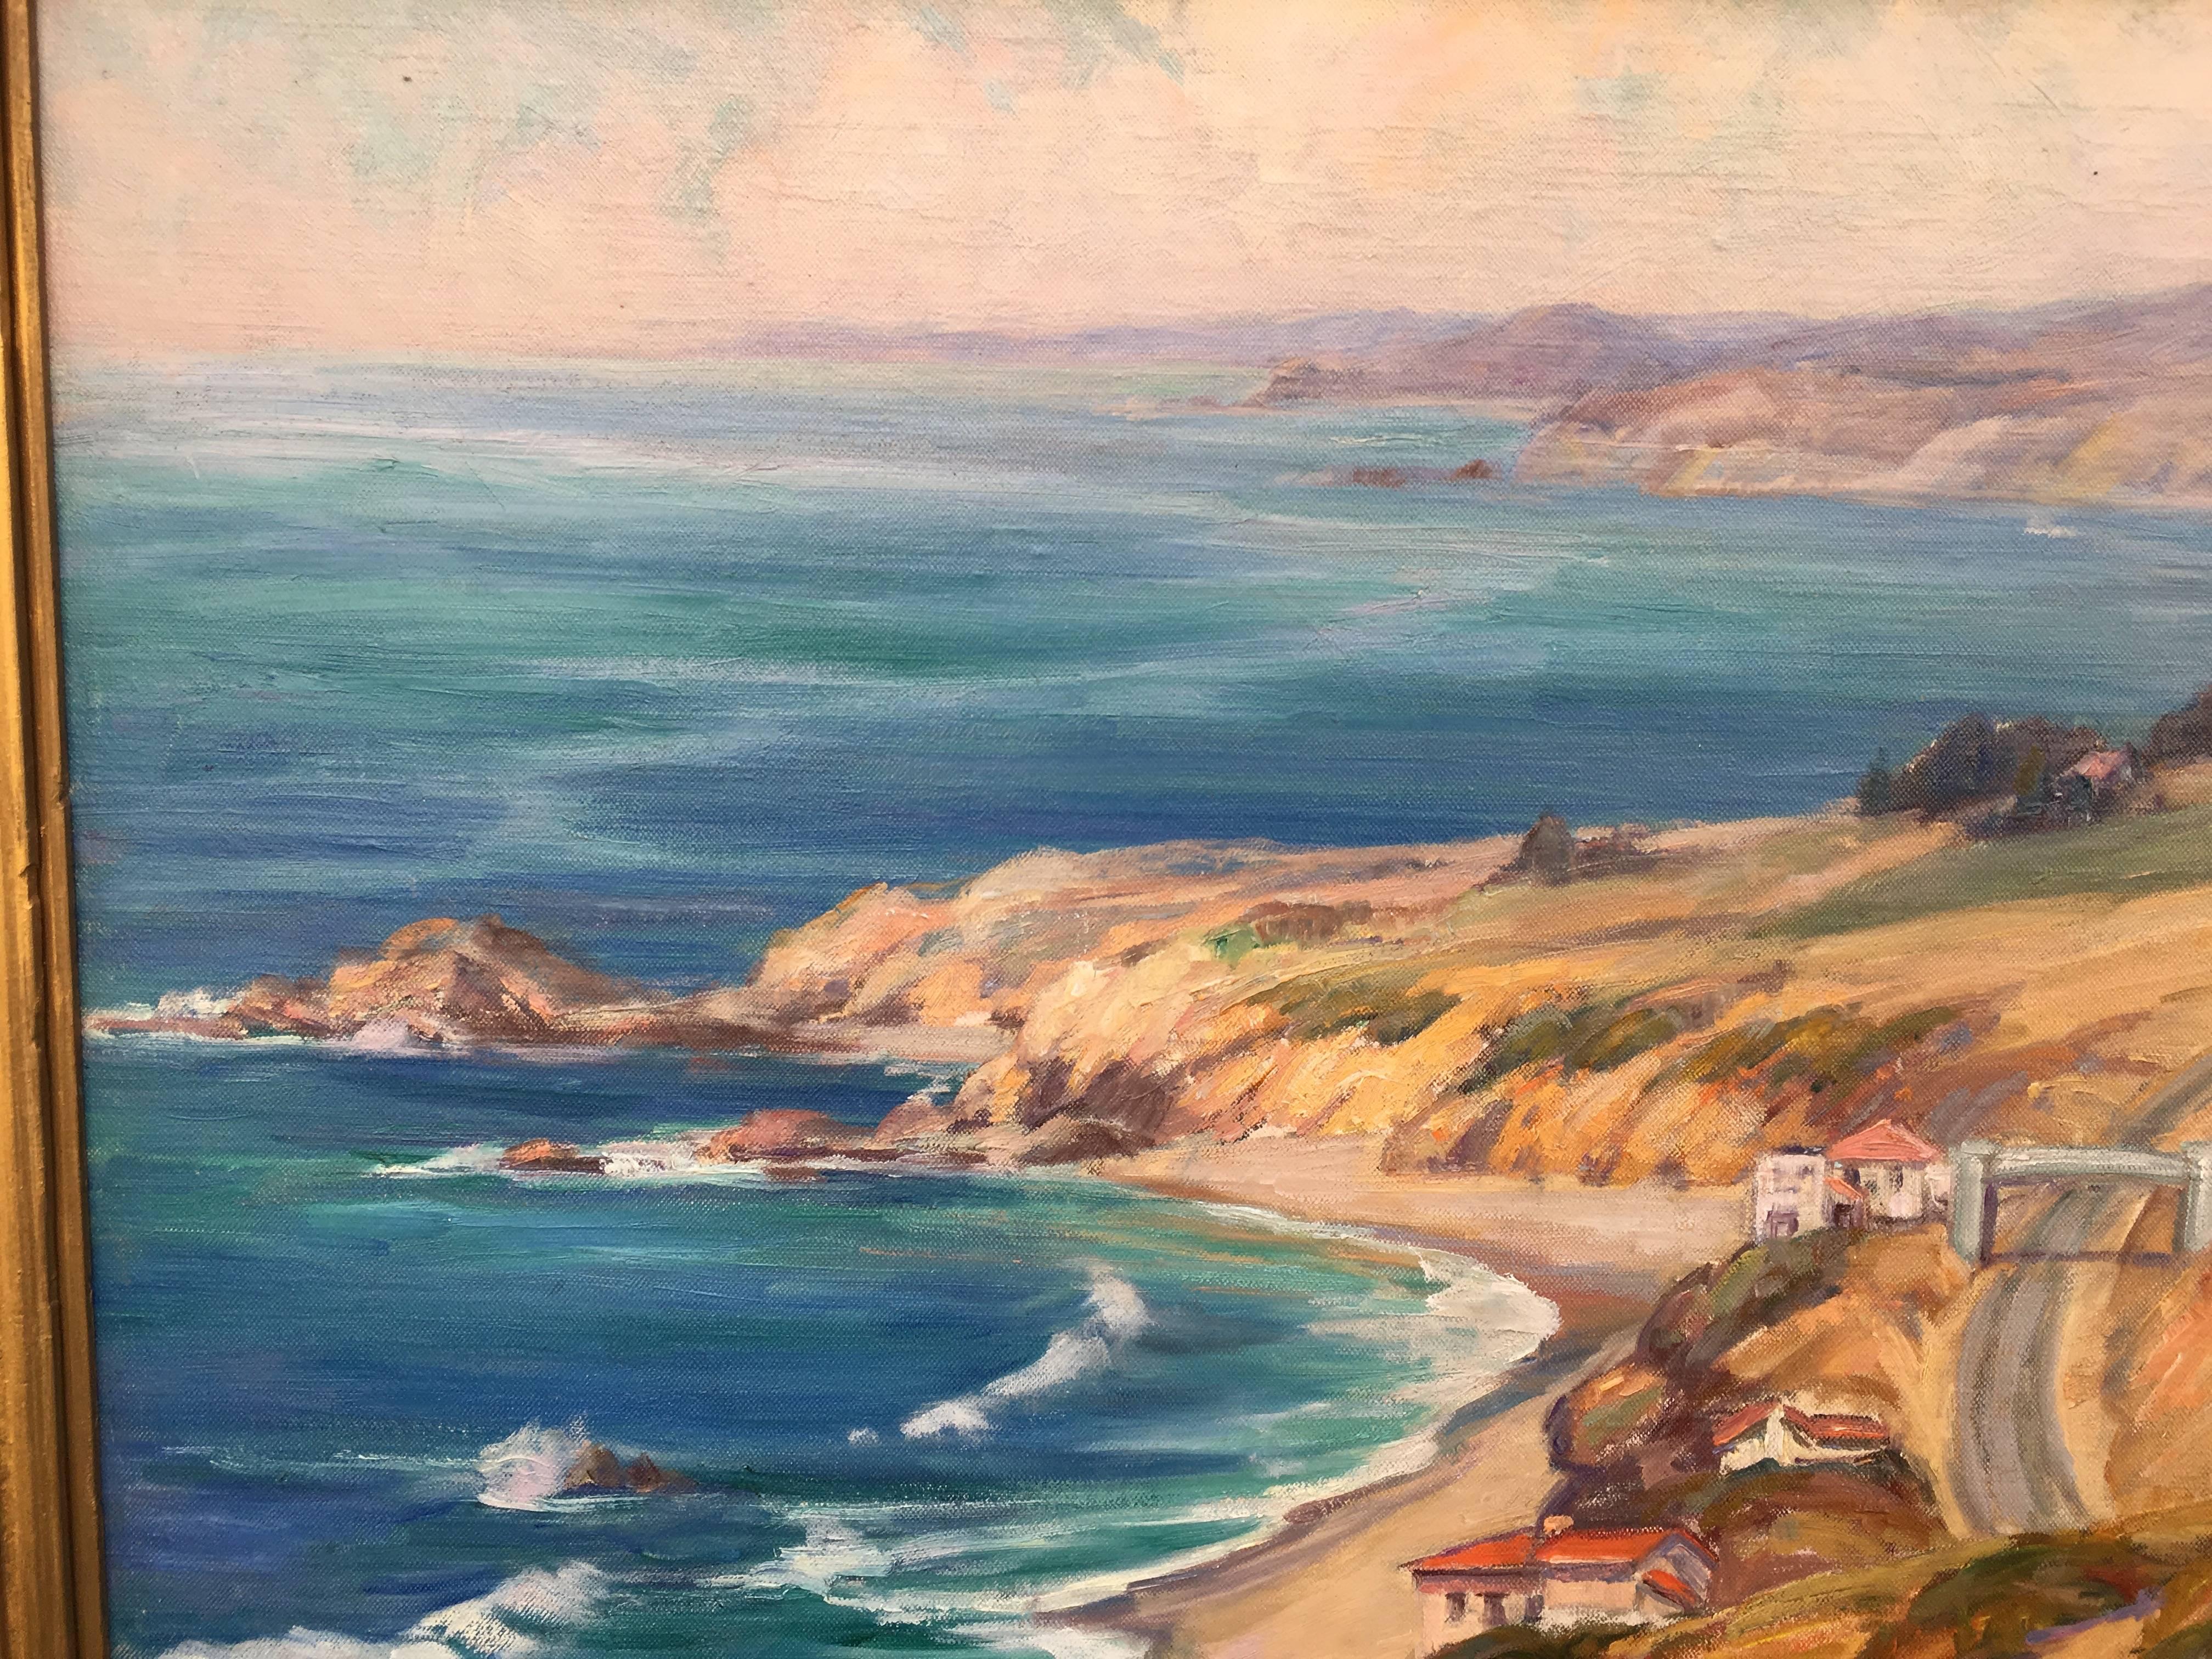 California Coastline - Brown Landscape Painting by Evylyna Nunn Miller